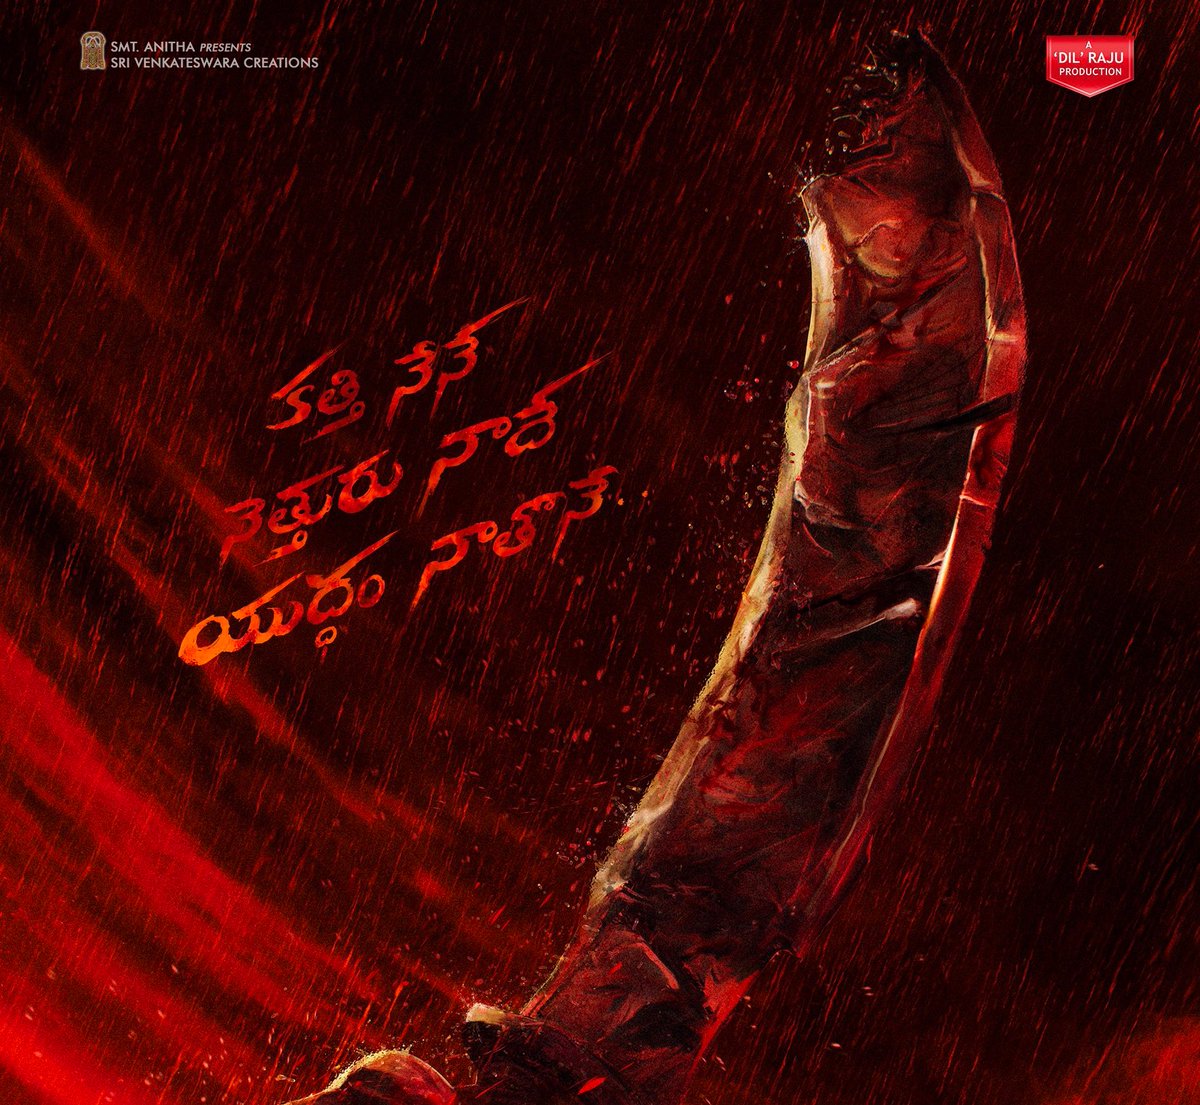 #VijayDevarakonda - BLOOD ROAR LOADING 🥵🥵🥵🔥🔥

#SVC59